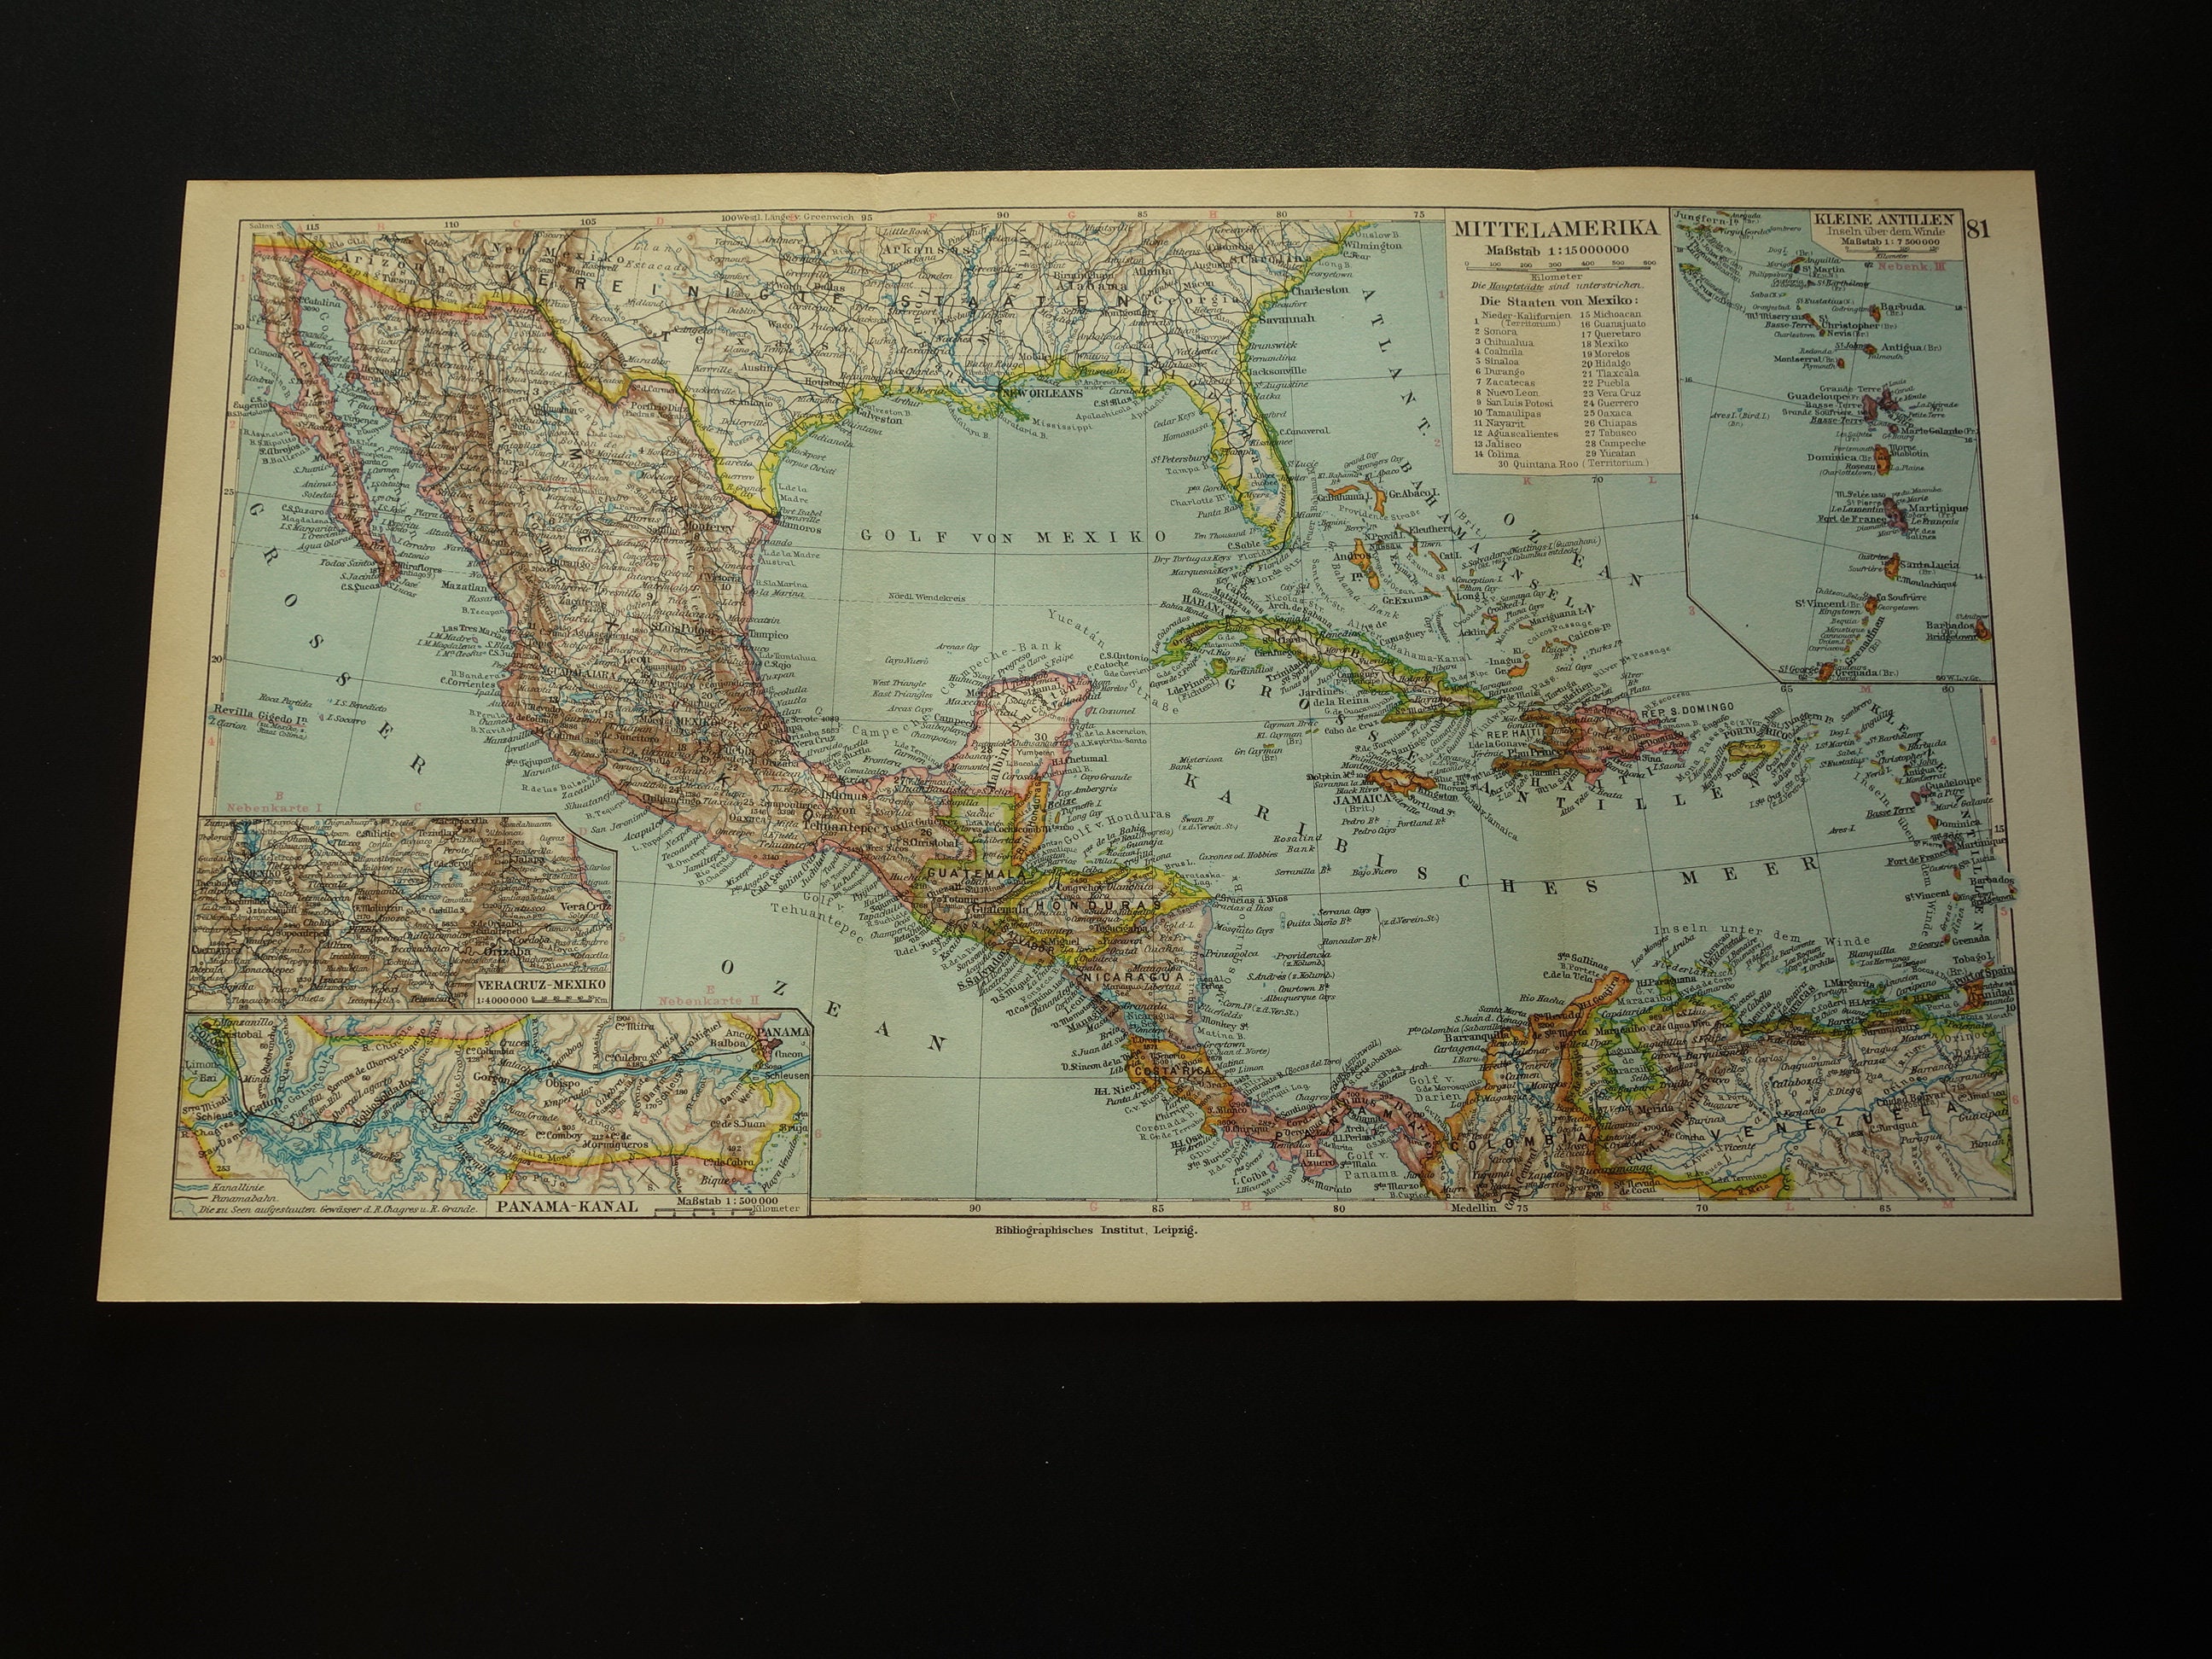 Old Map of Middle America 1928 Original Vintage Print - Etsy UK